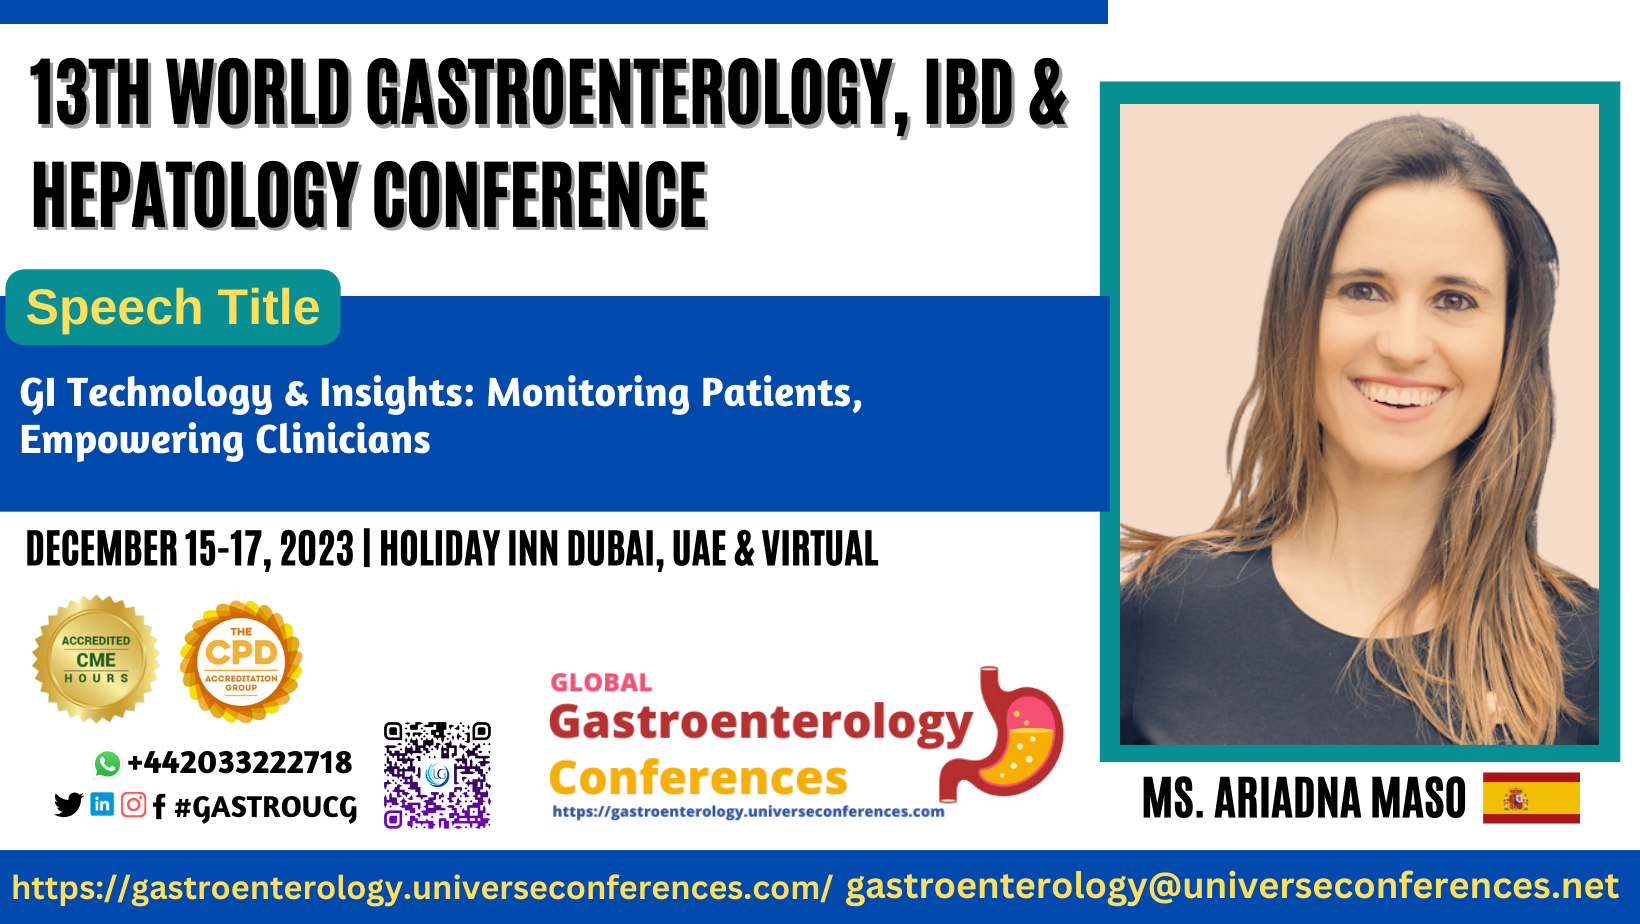 Ms. Ariadna Maso_13th World Gastroenterology, IBD & Hepatology Conference on December 15-017, 2023 in Dubai, UAE.